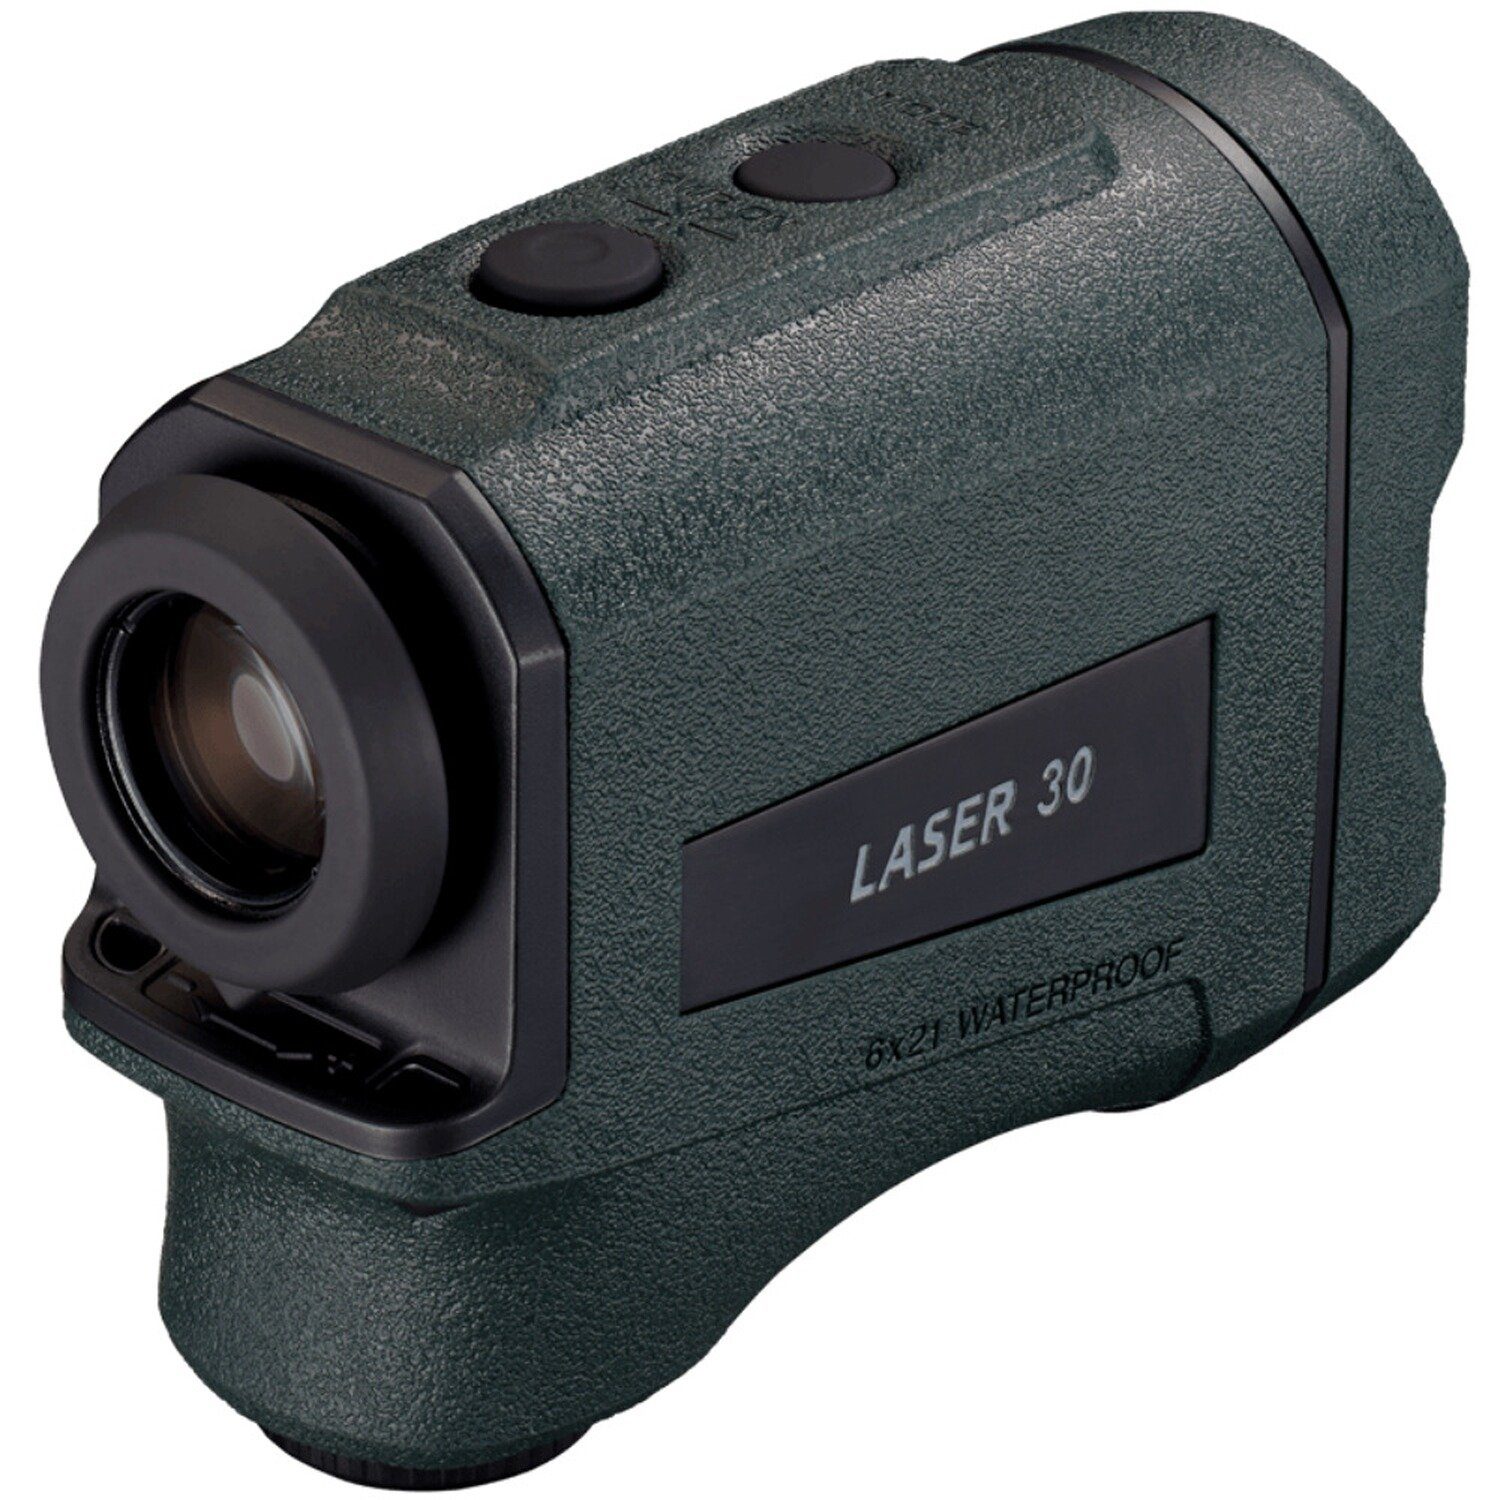 30 Entfernungsmesser Fernglas Laser Nikon